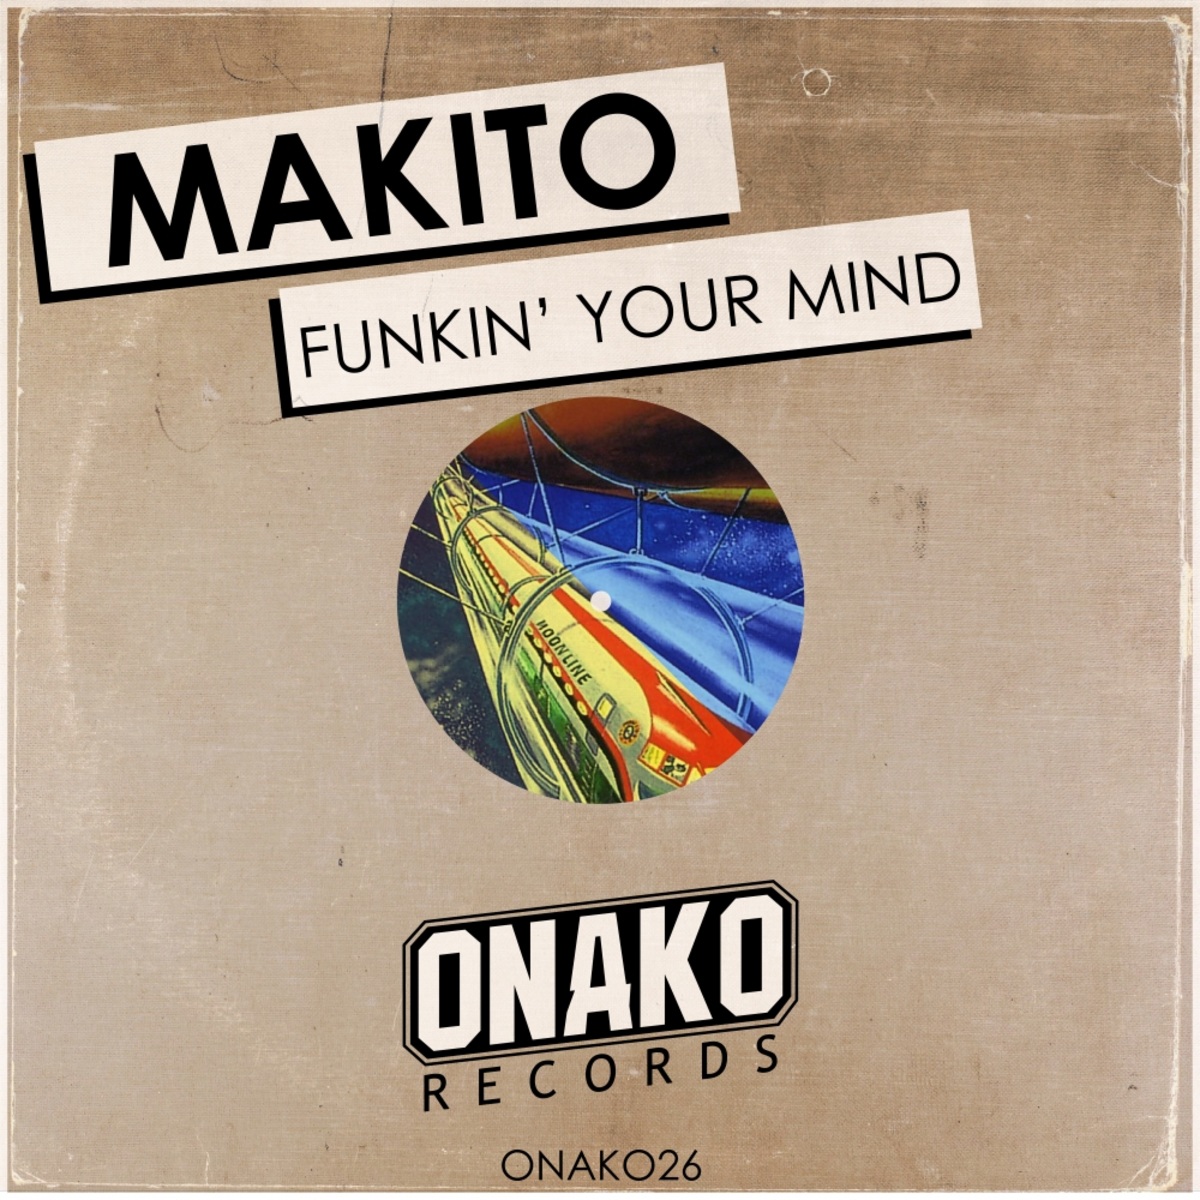 Makito - Funkin' Your Mind / Onako Records